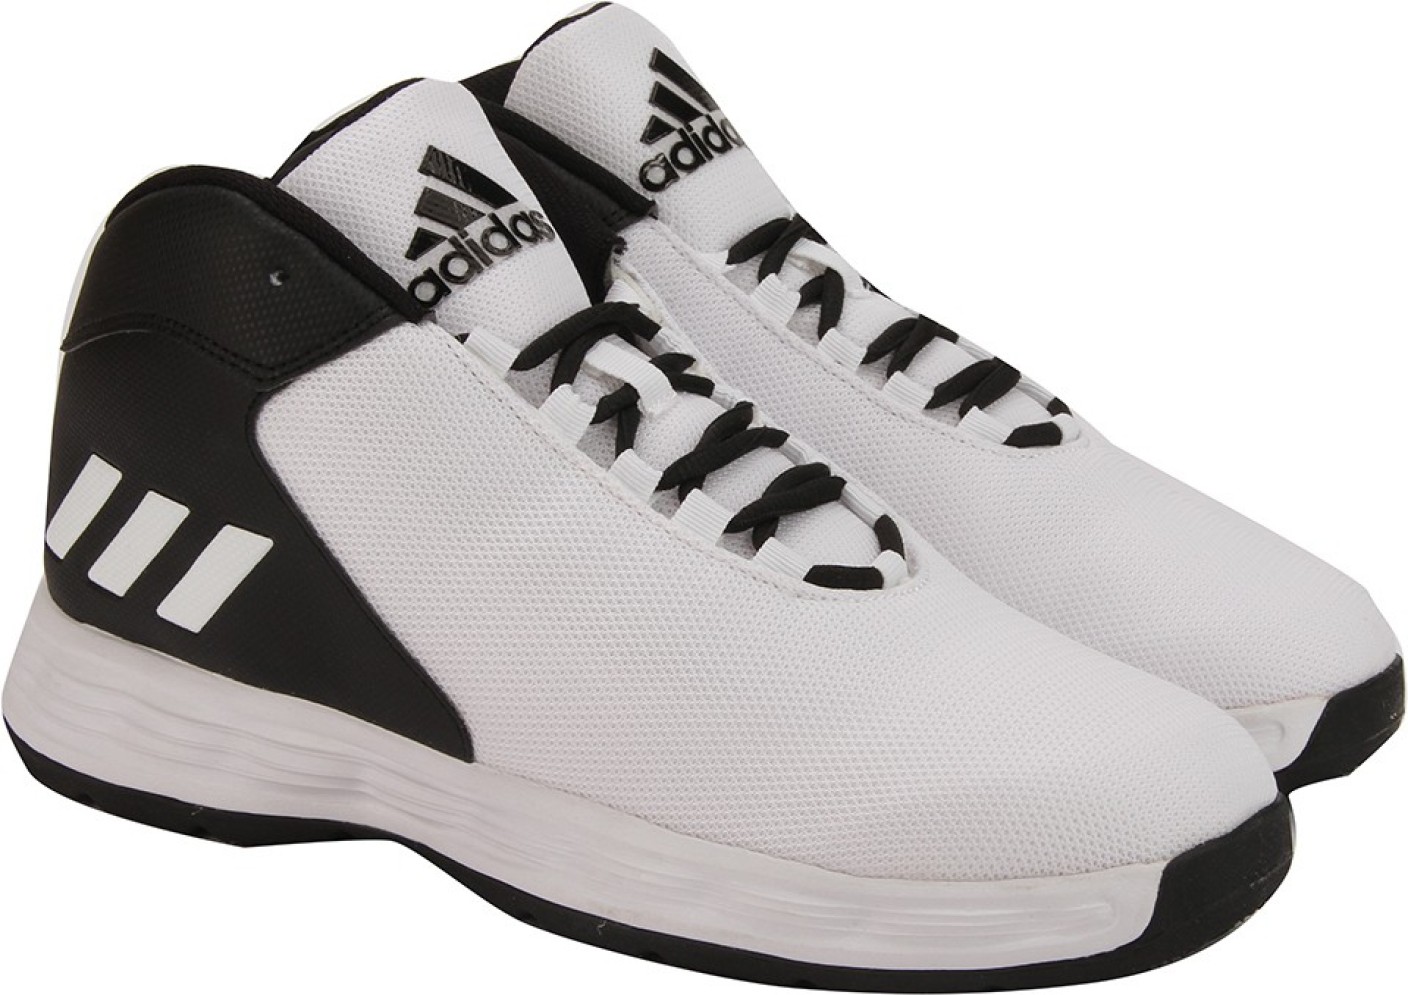 Adidas HOOPSTA Basketball Shoes For Men - Buy BLACK/WHITE Color Adidas HOOPSTA Basketball Shoes ...